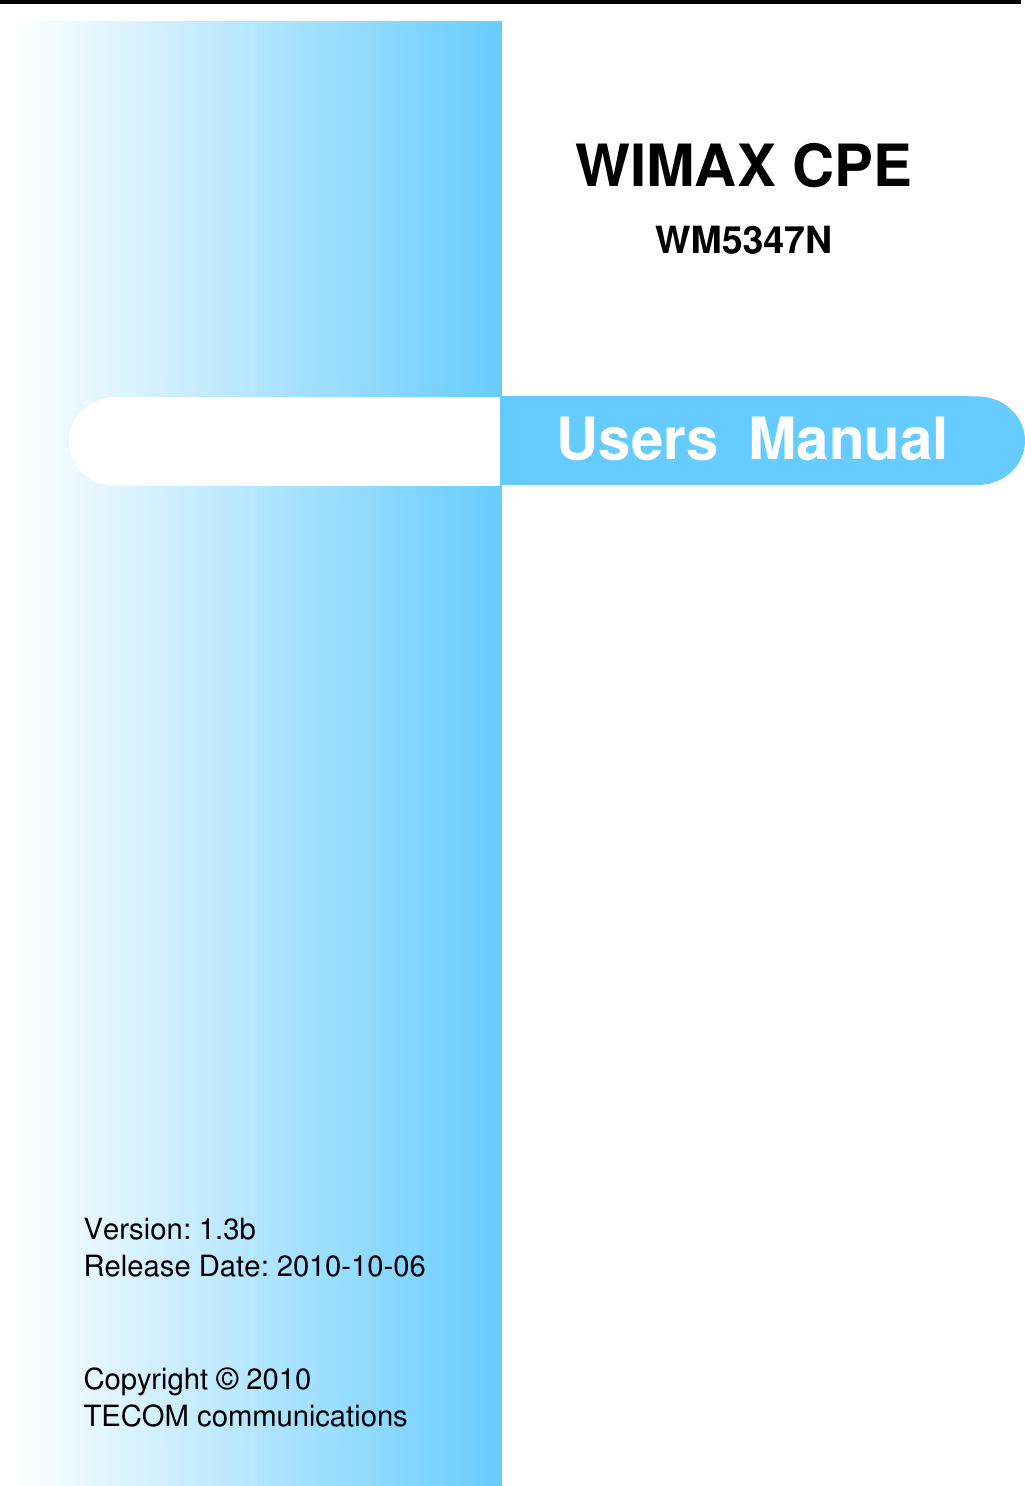                      Users  Manual Version: 1.3b Release Date: 2010-10-06     Copyright © 2010 TECOM communications WIMAX CPE WM5347N 